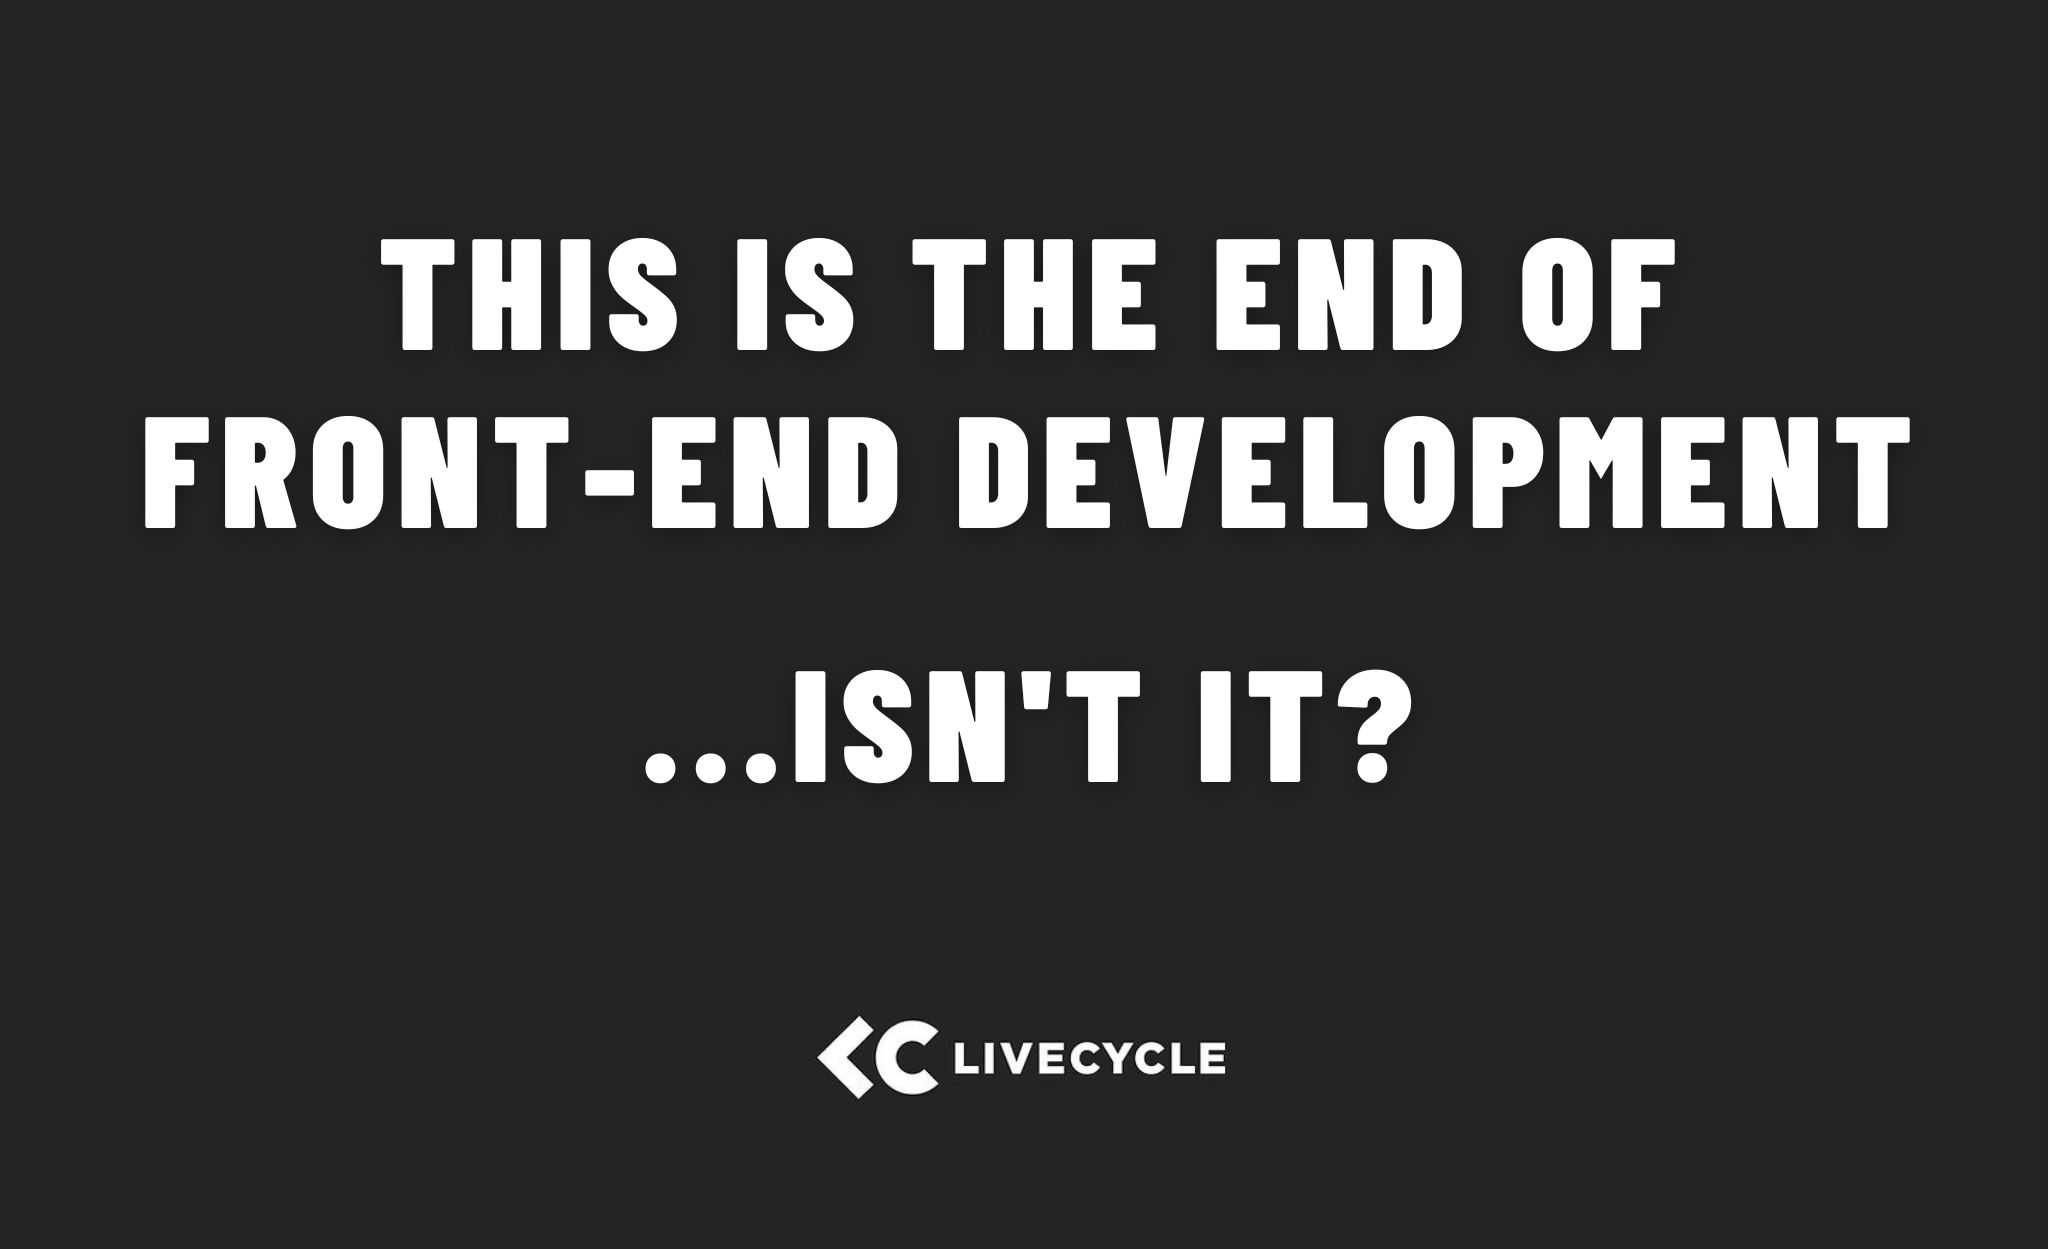 Front end development is ending. Isn't it??